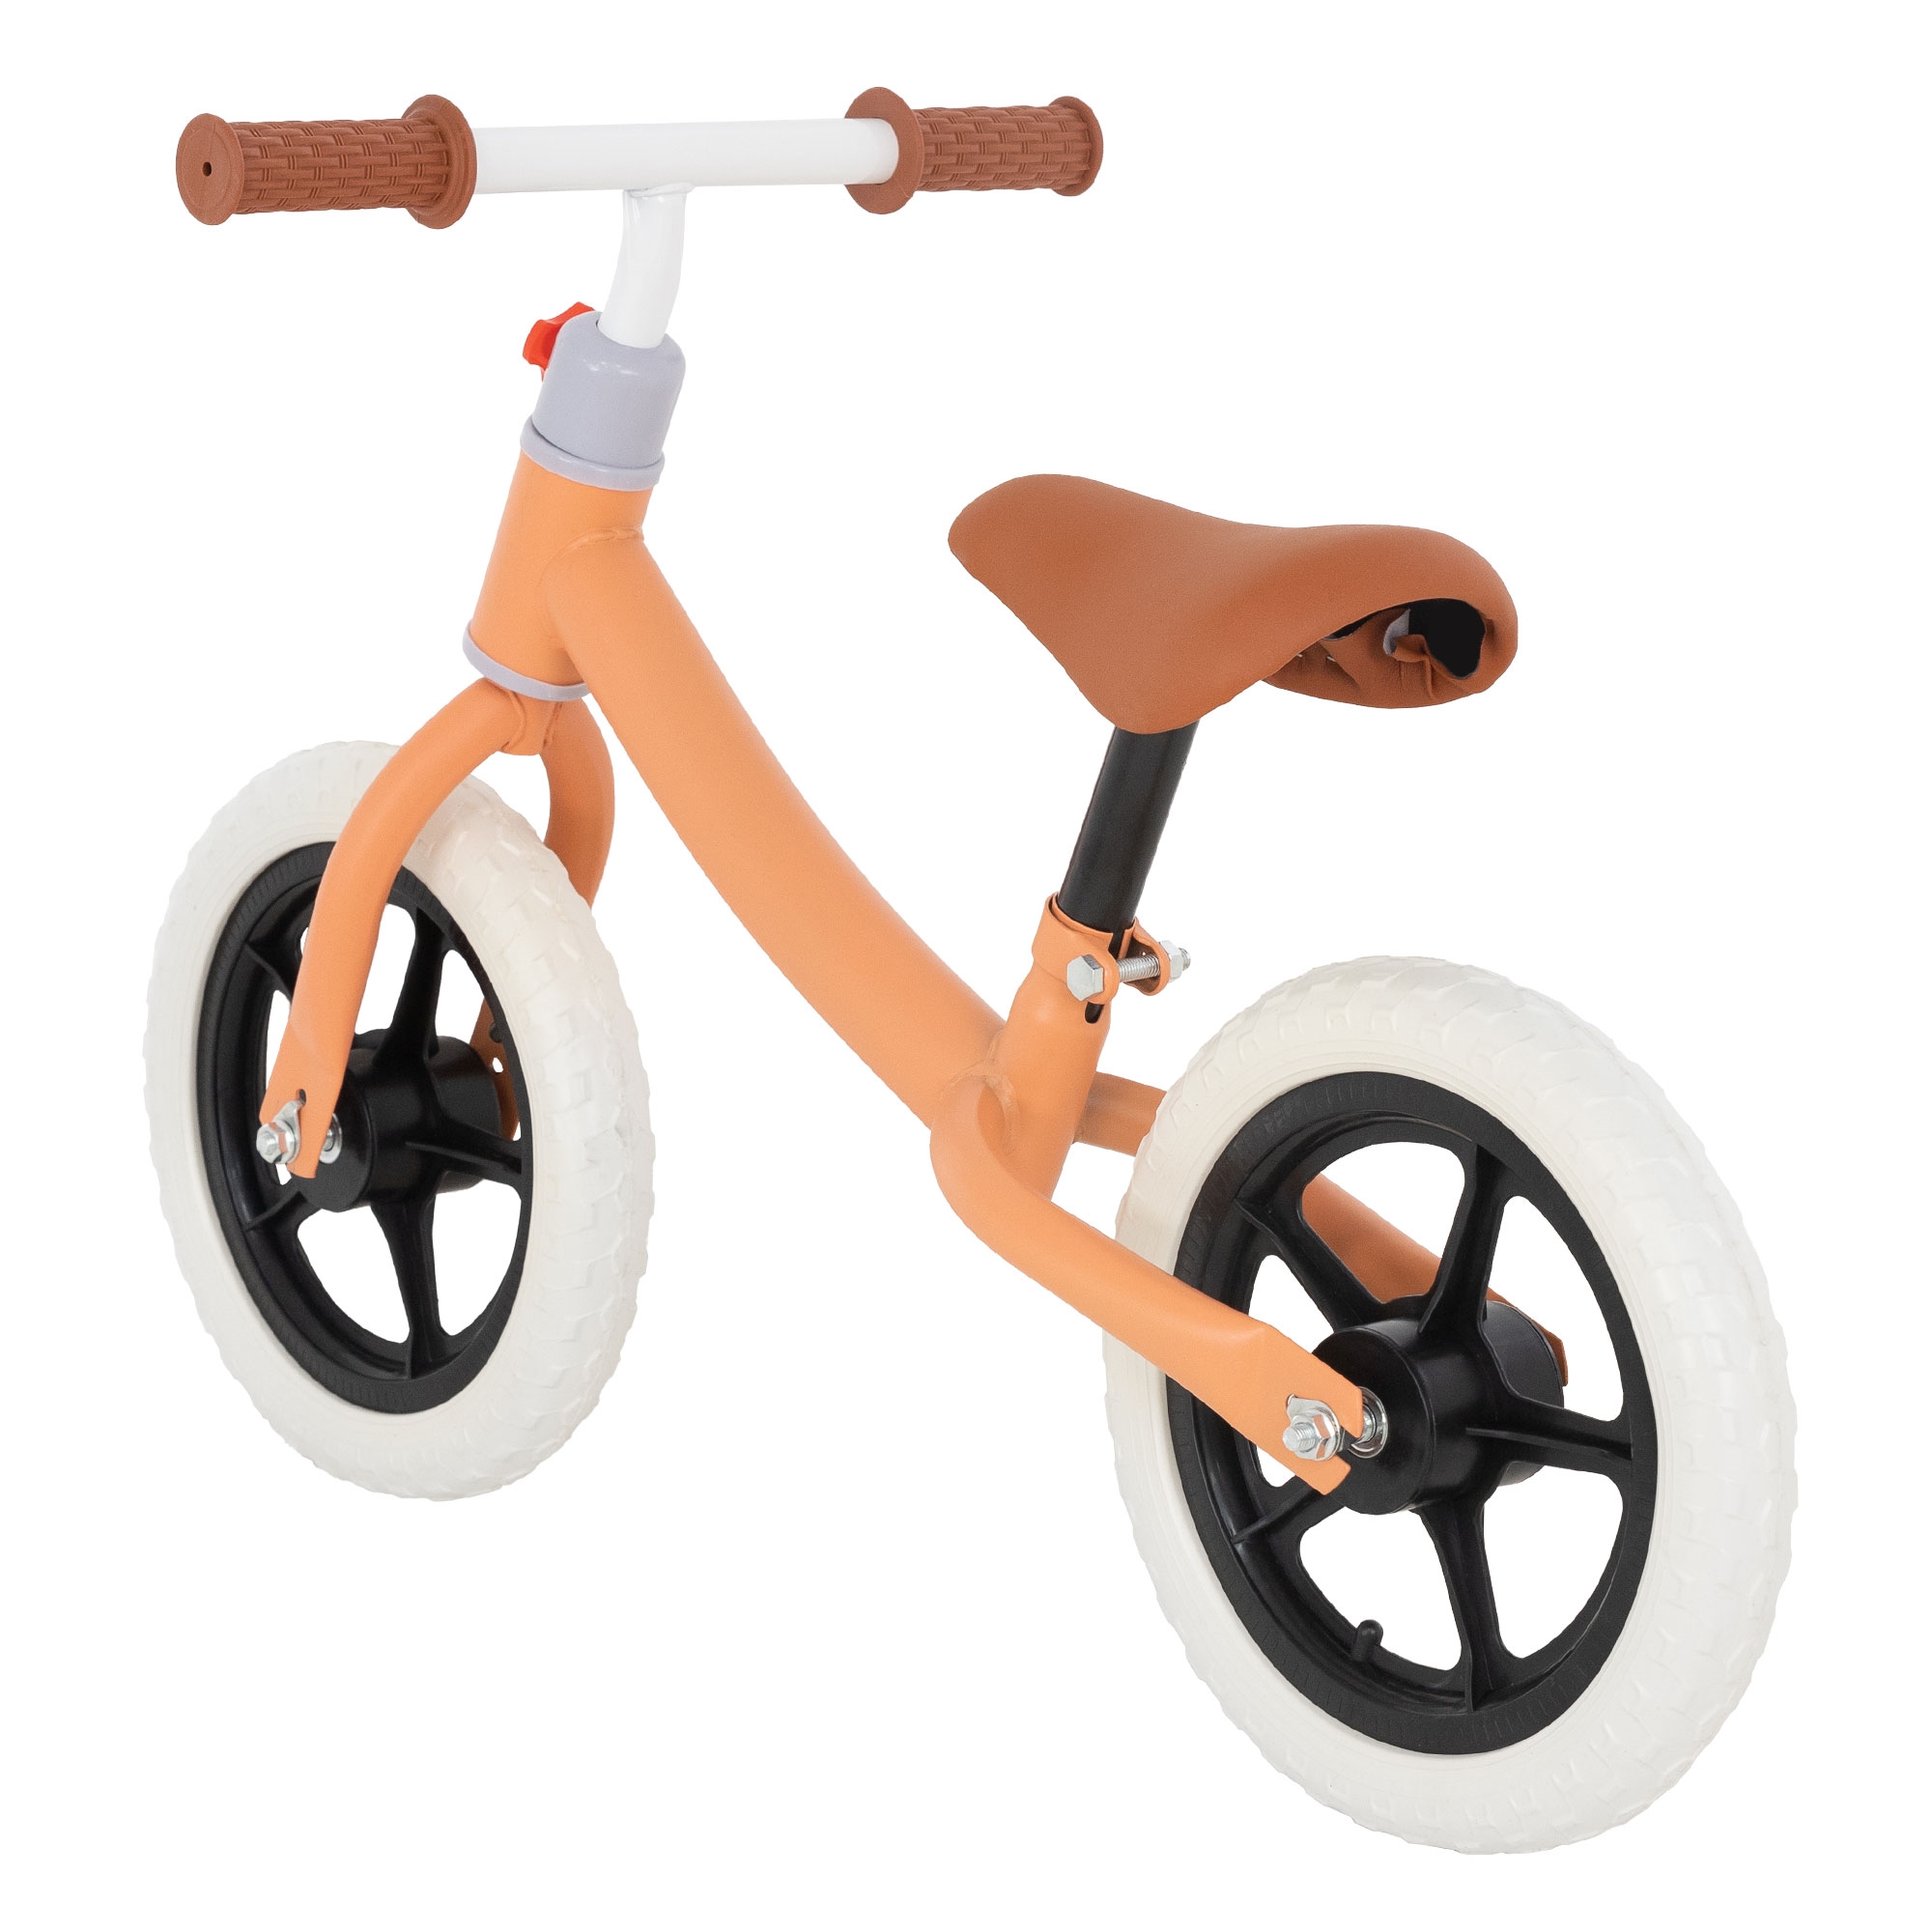 Laufrad Kinderlaufrad Lernrad Lauffahrrad Lernlaufrad Kinder Balance Bike